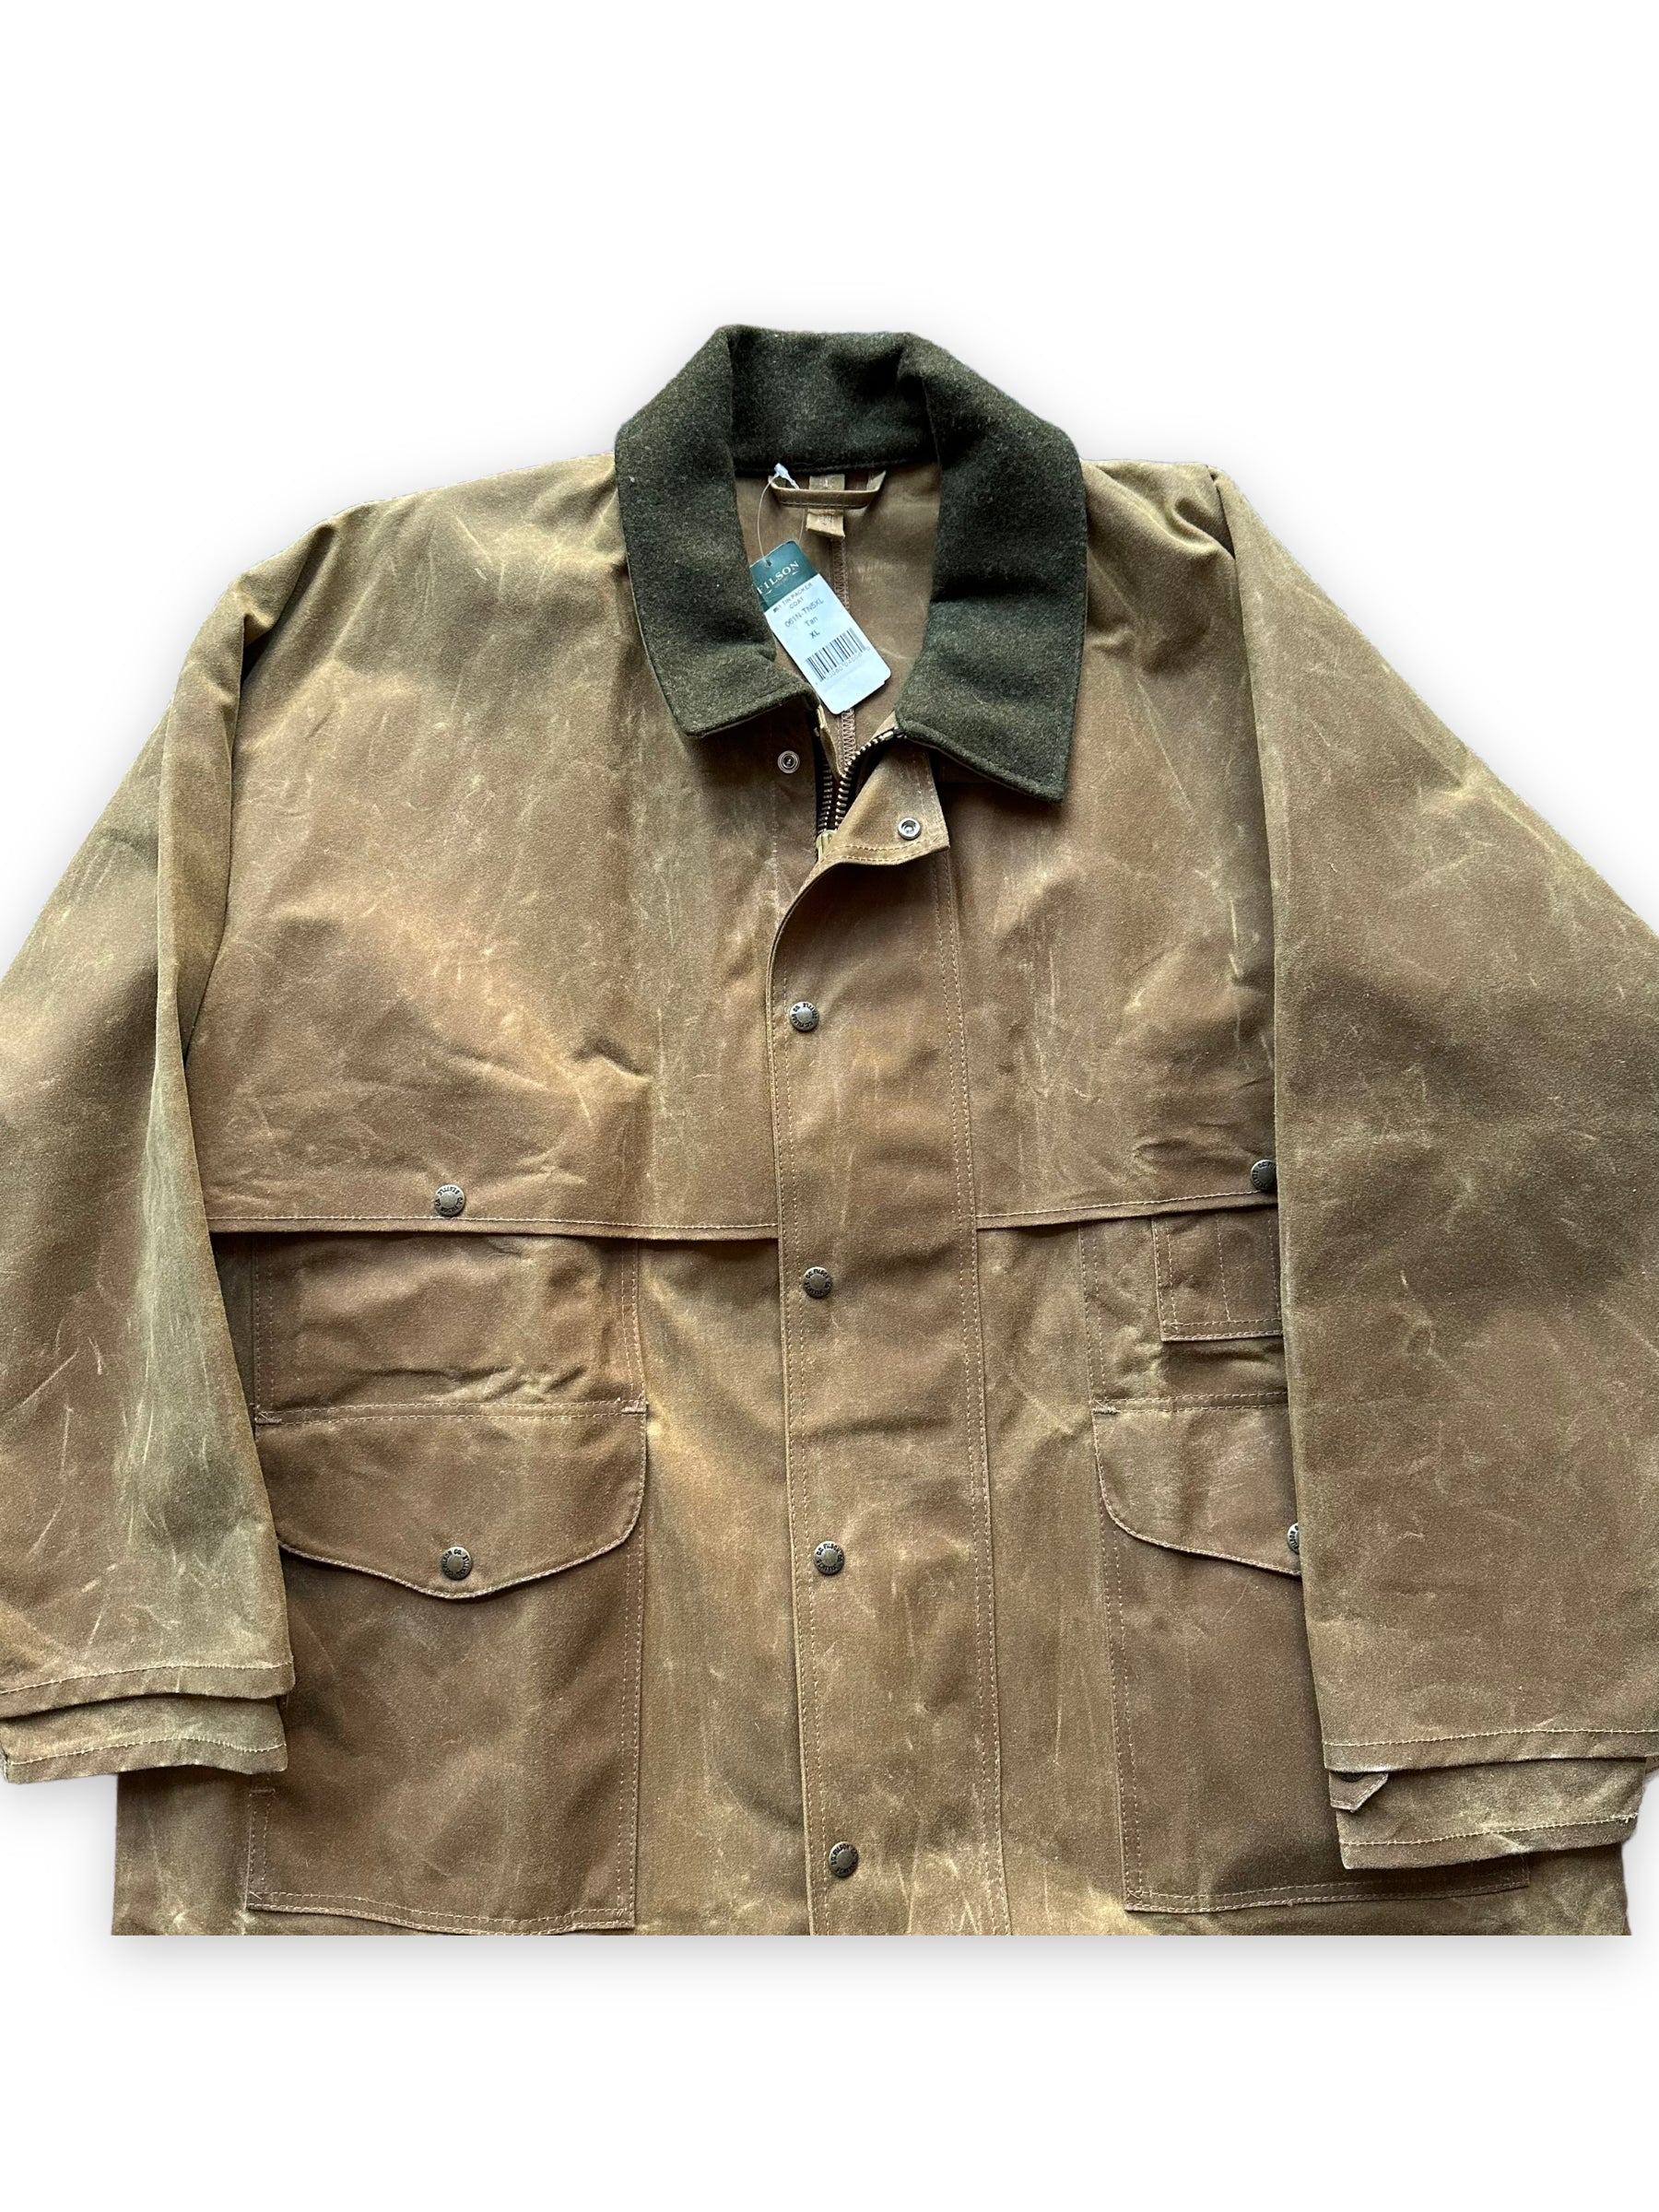 Front Detail of NWT Filson Tin Packer Coat SZ XL |  Barn Owl Vintage Goods Filson | Vintage Filson Tin Cloth Workwear Seattle